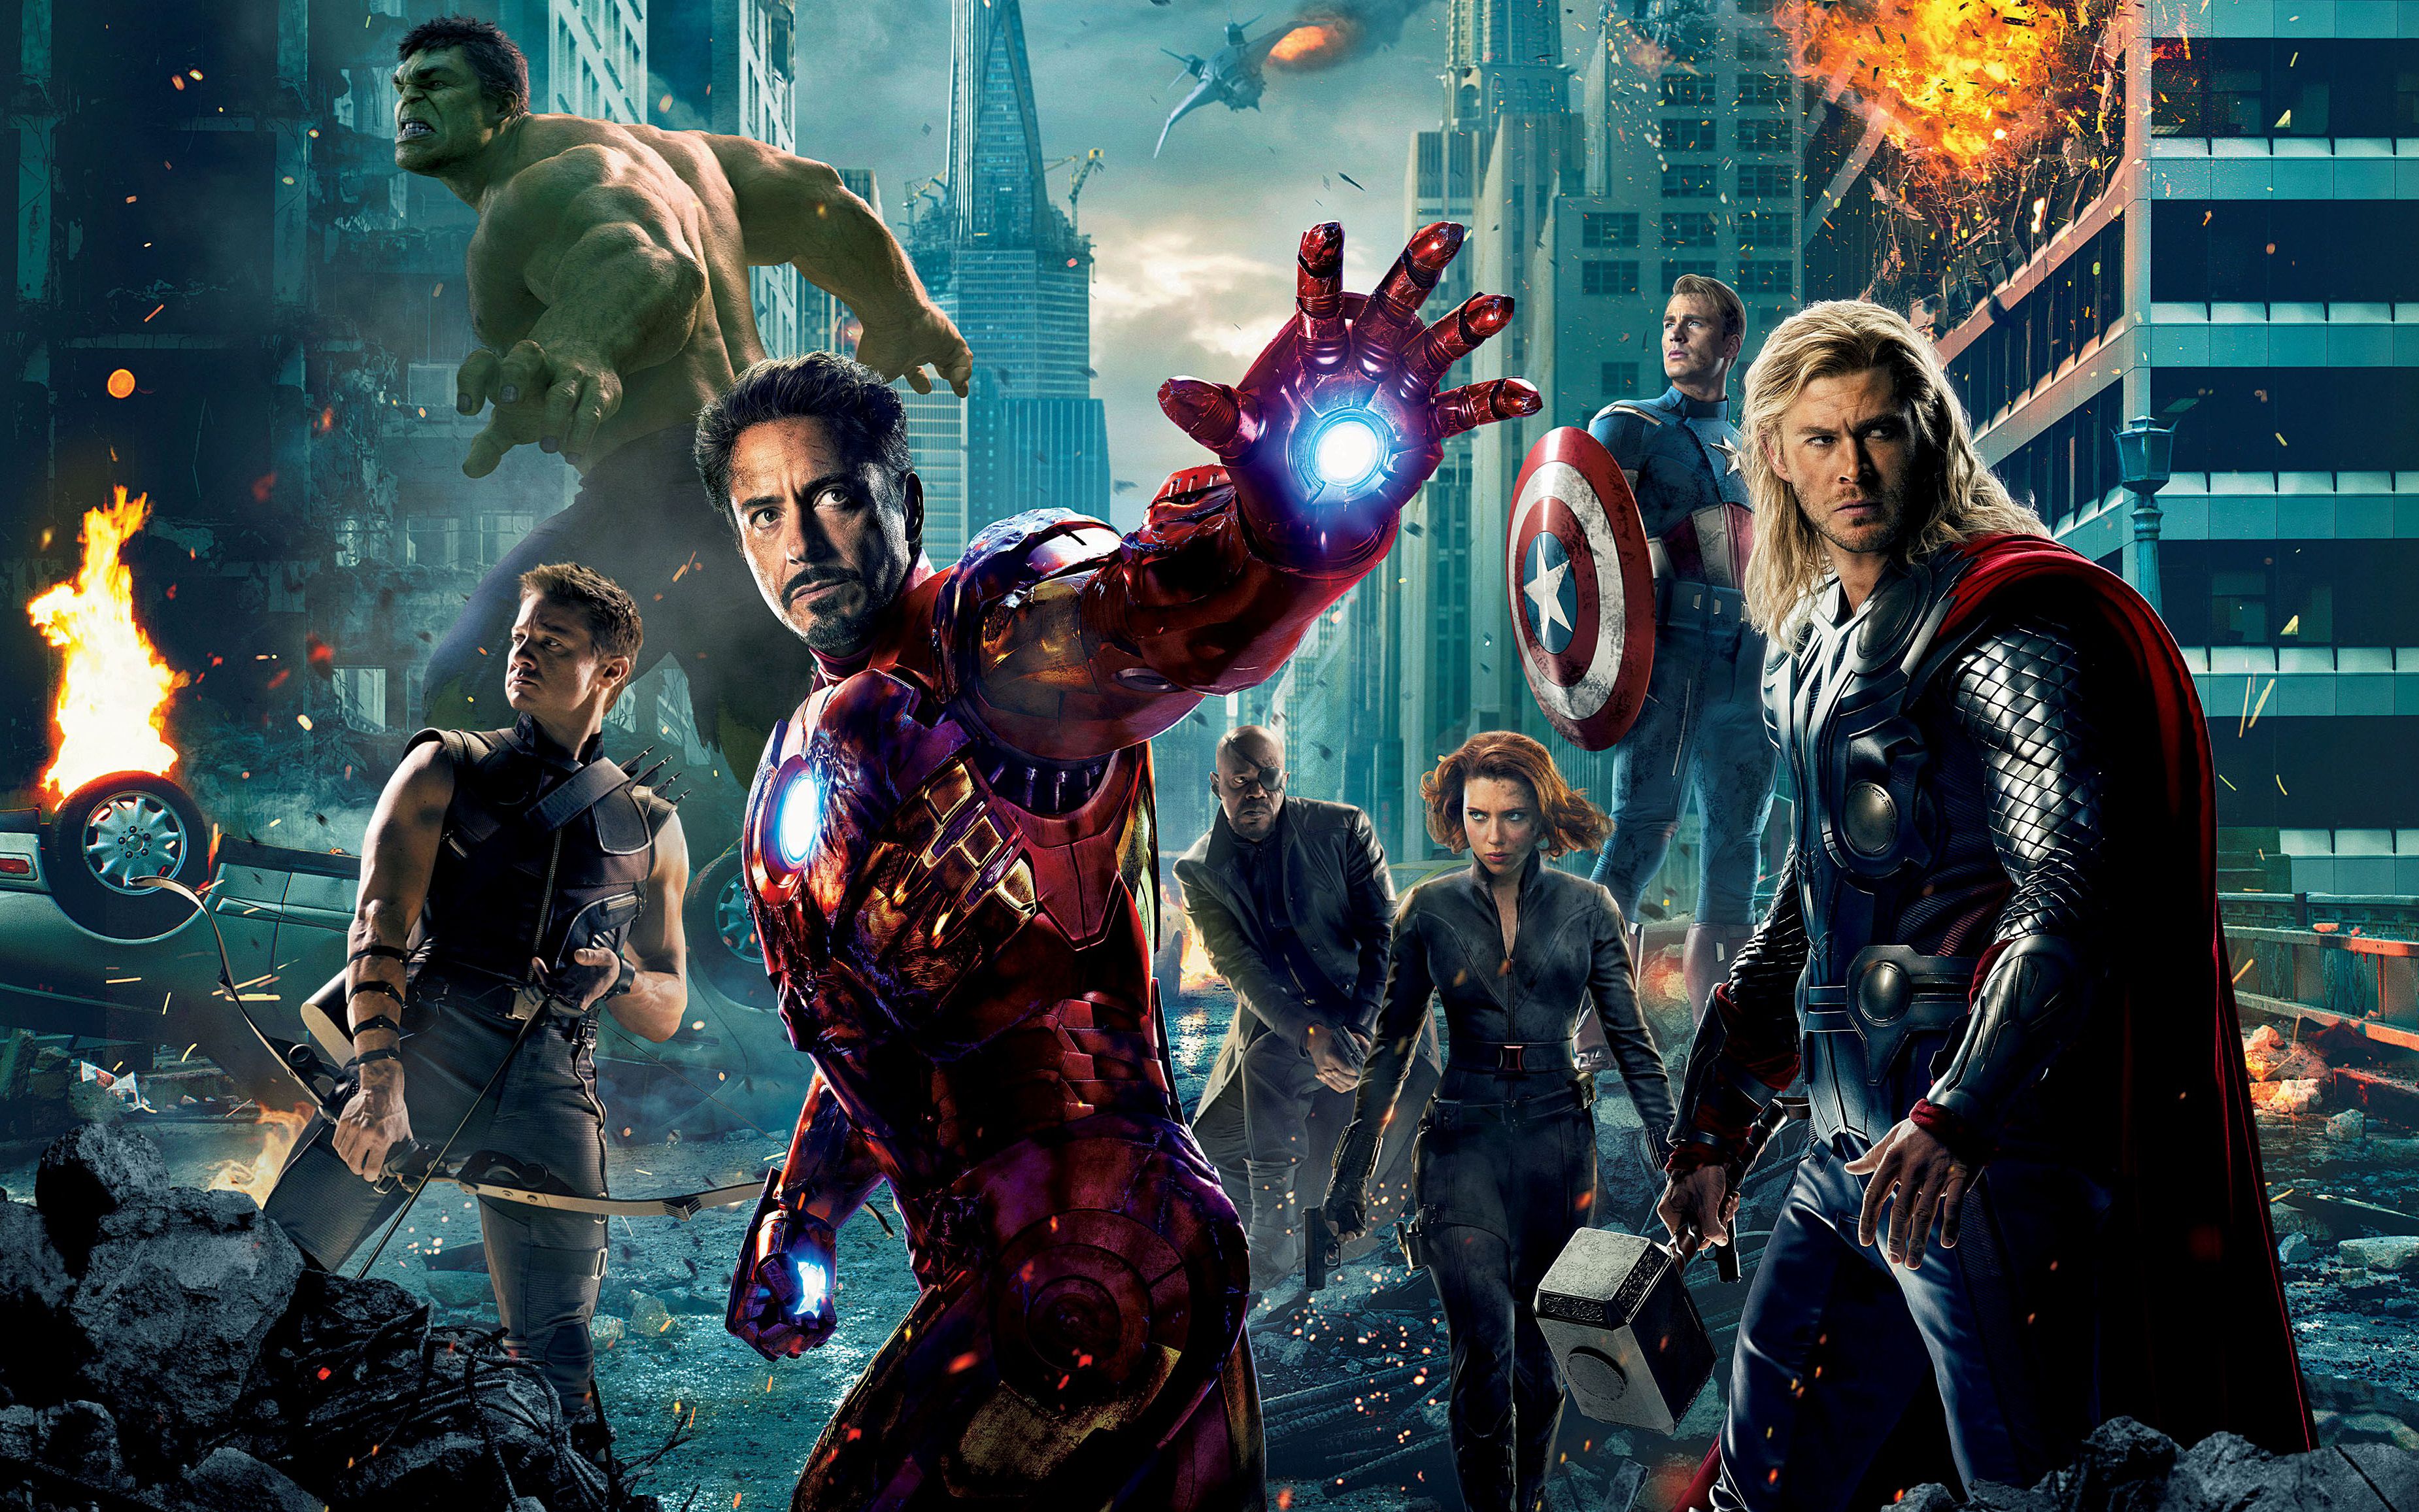 Avengers picture.jpg